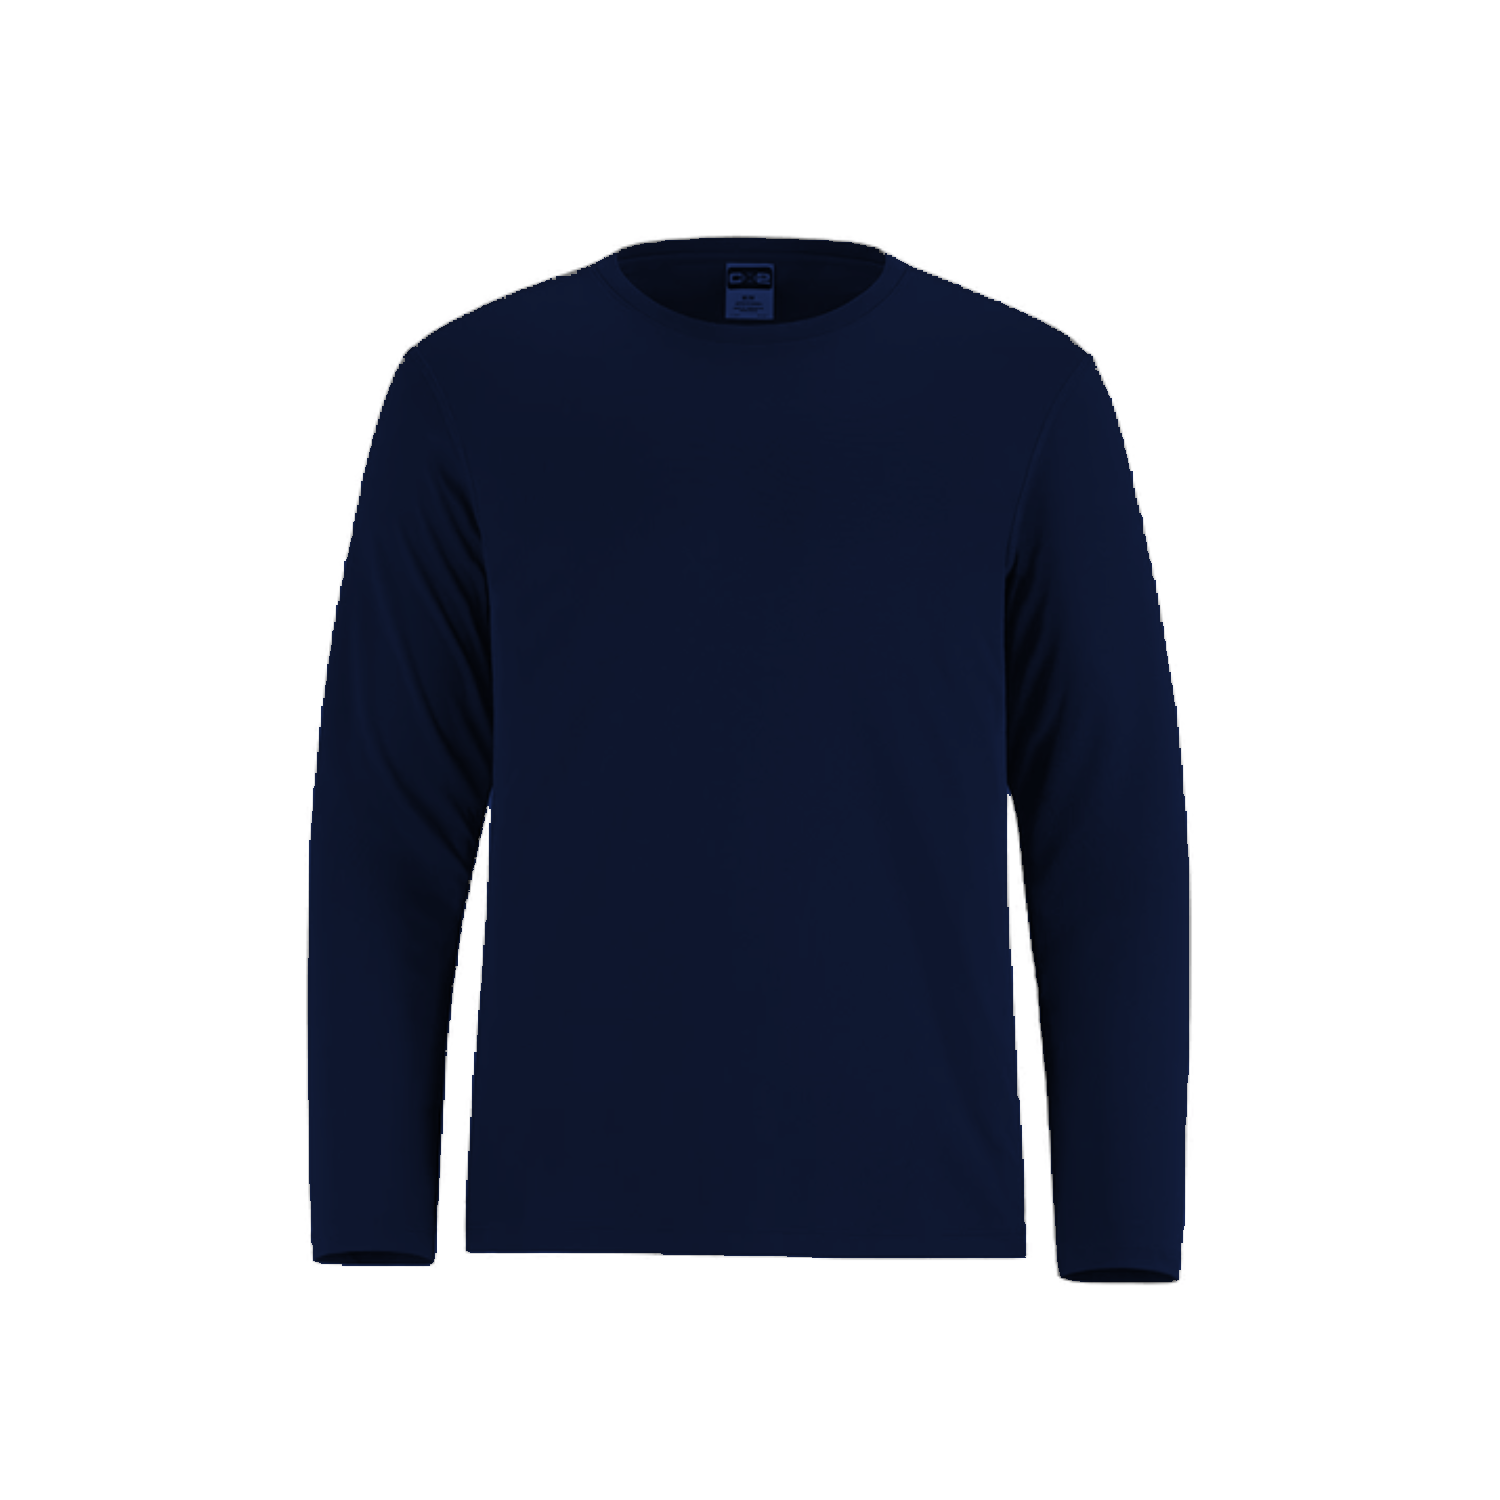 S05937 - Shore - Men's Long Sleeve Crew Neck Polyester T-Shirt